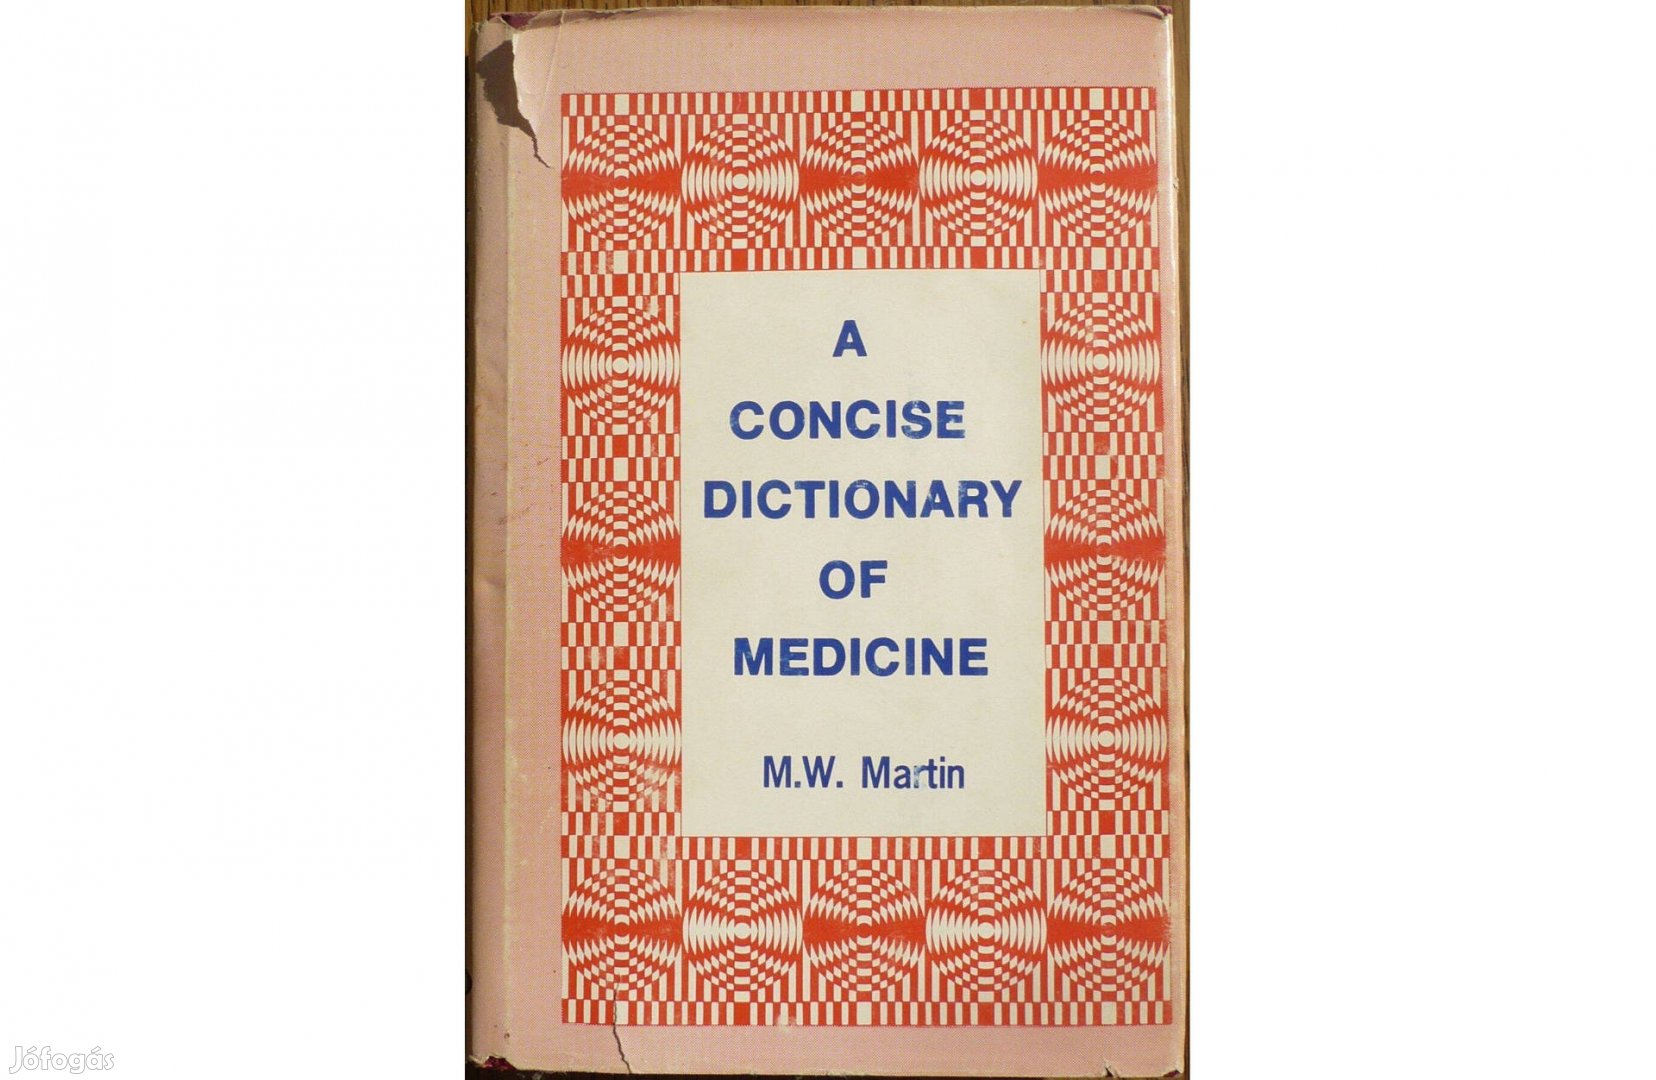 A concise dictionary of medicine -M.W. Martin, orvosi kéziszótár